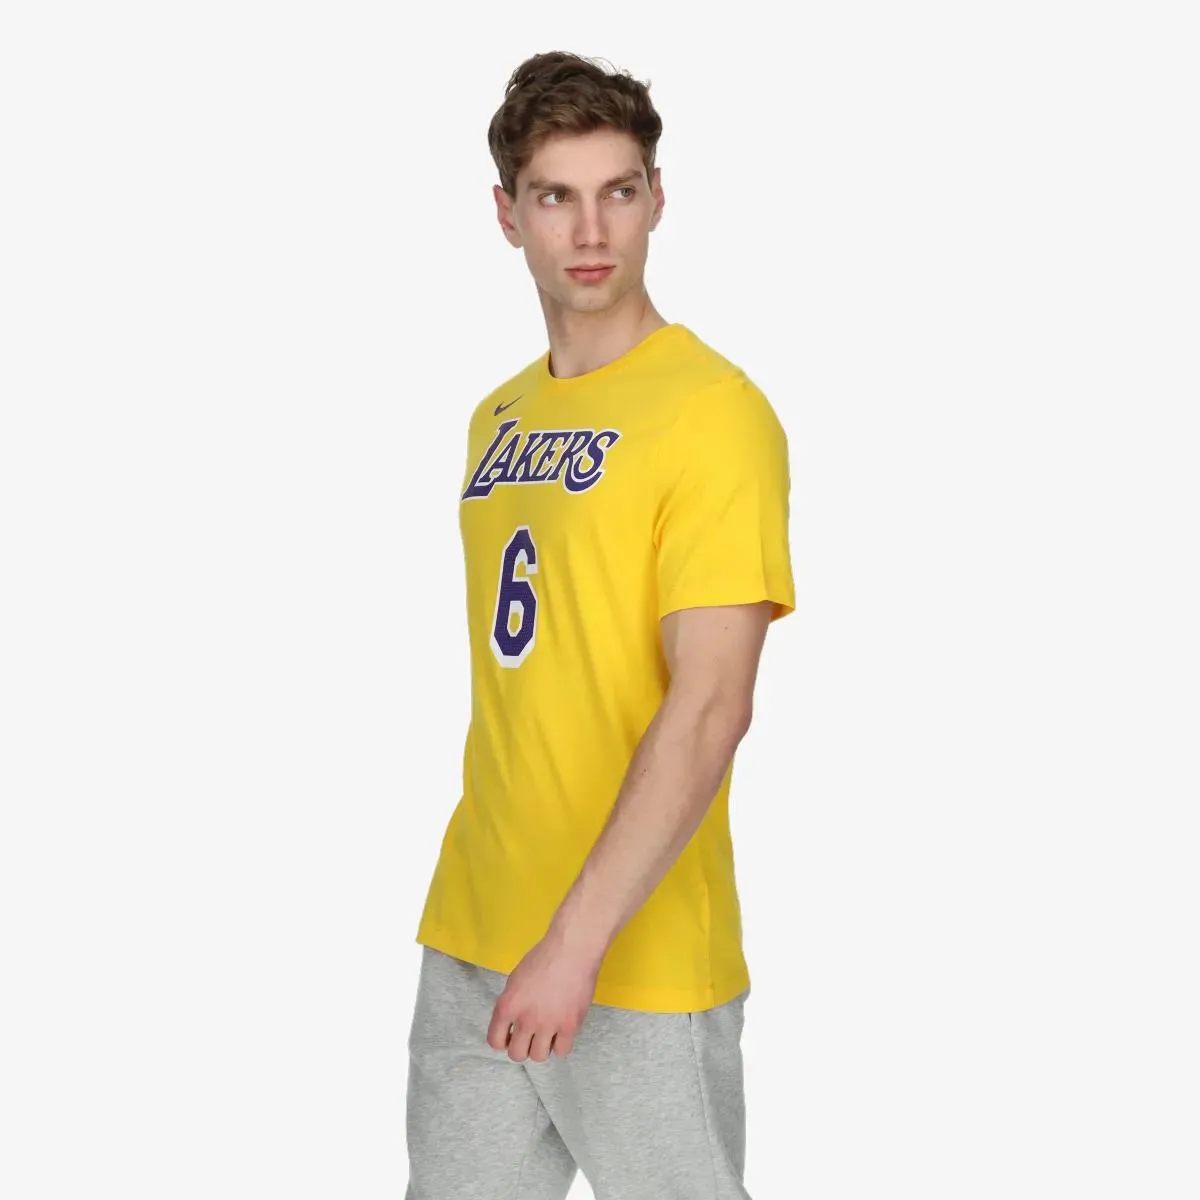 Nike T-shirt LeBron James Los Angeles Lakers 